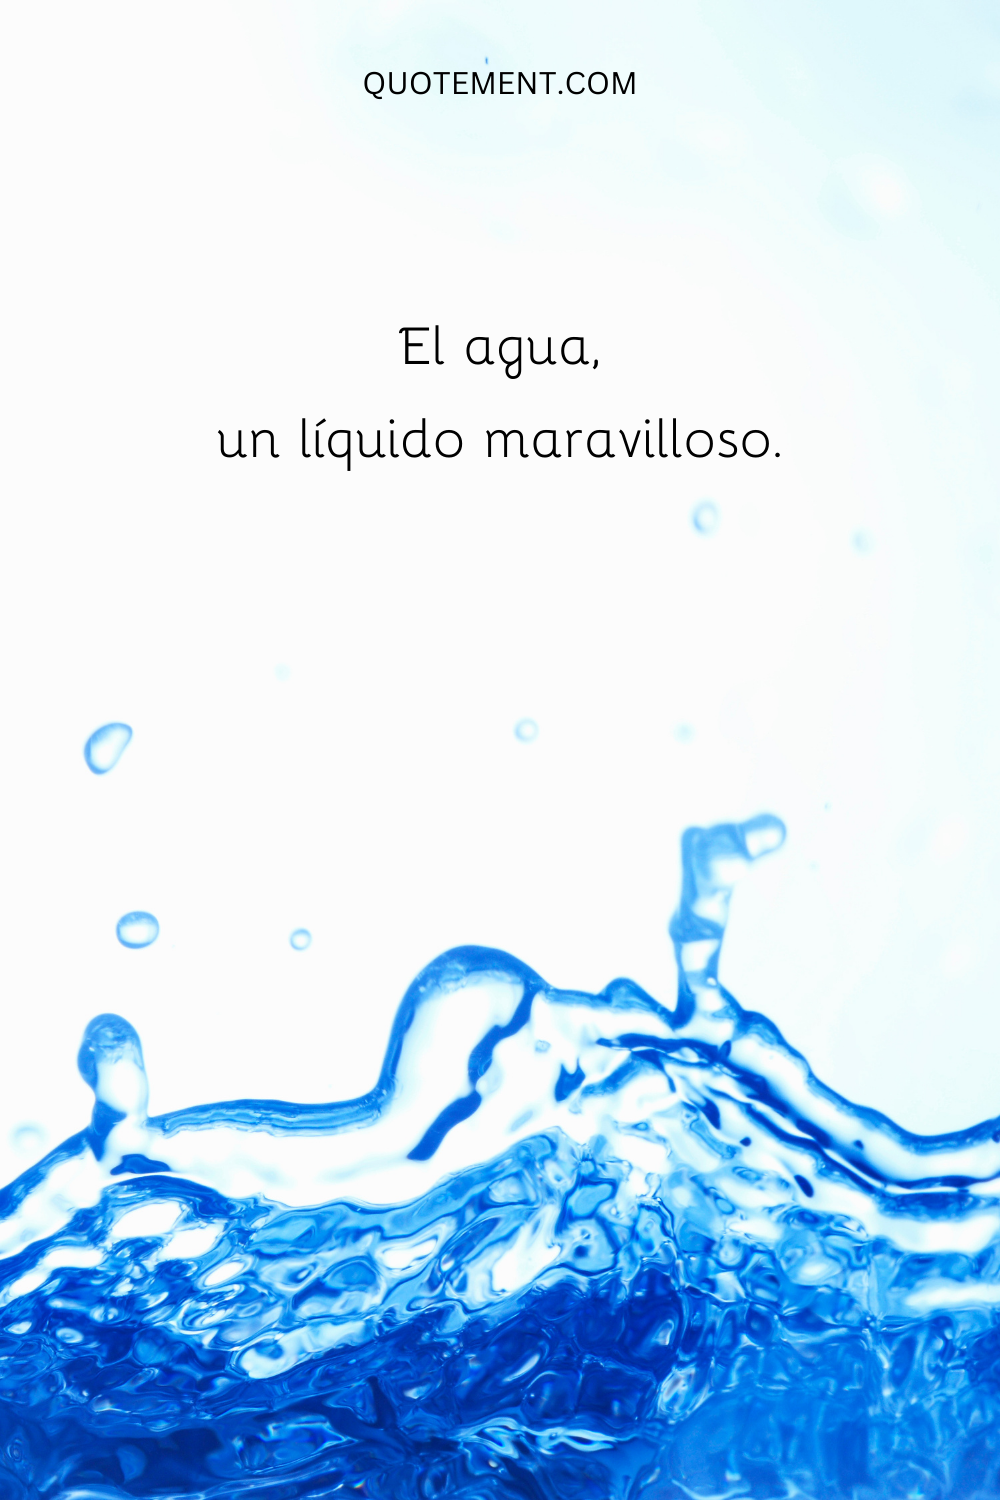 El agua, un líquido maravilloso.